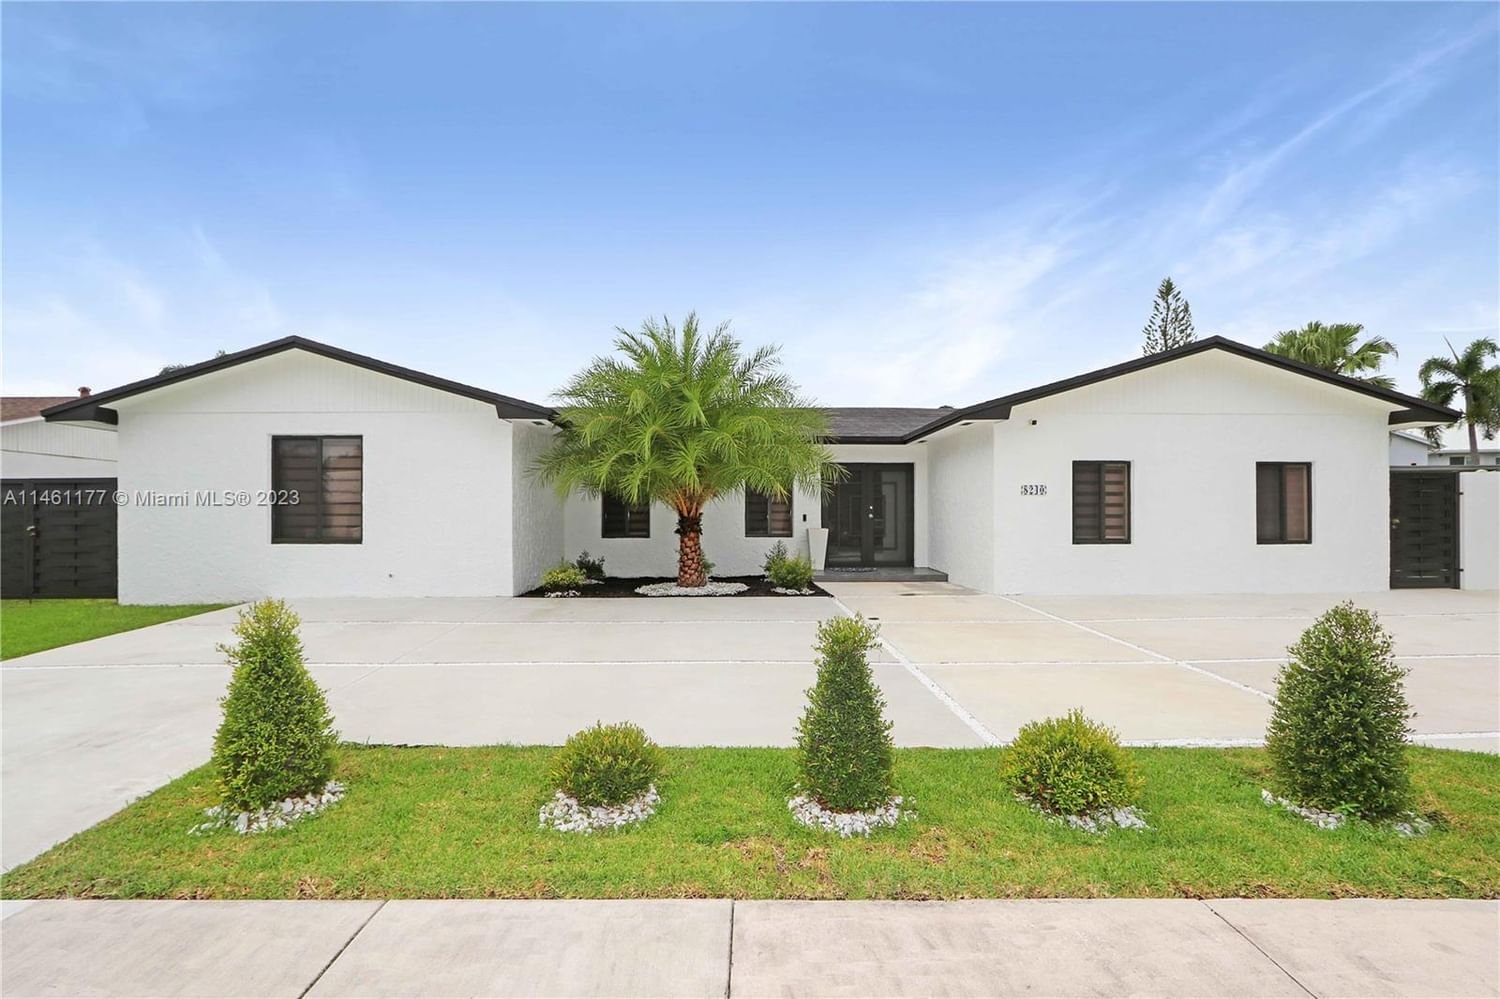 Real estate property located at 8240 204th St, Miami-Dade County, SAGA BAY SEC 1, Cutler Bay, FL